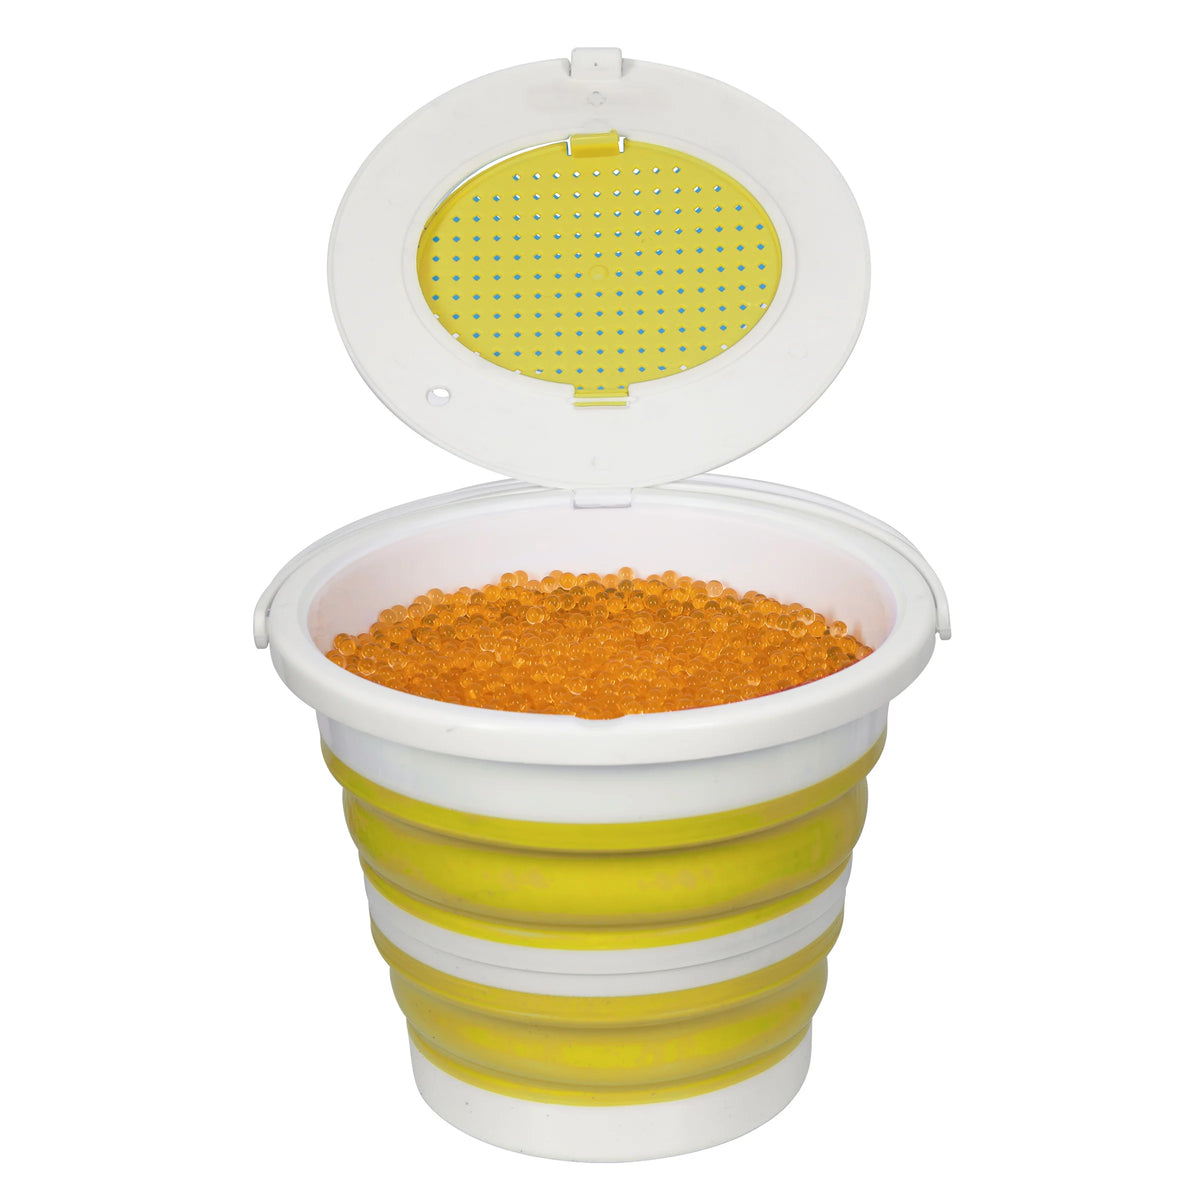 15,000 Gellyball Tub/Bucket | Color: Yellow